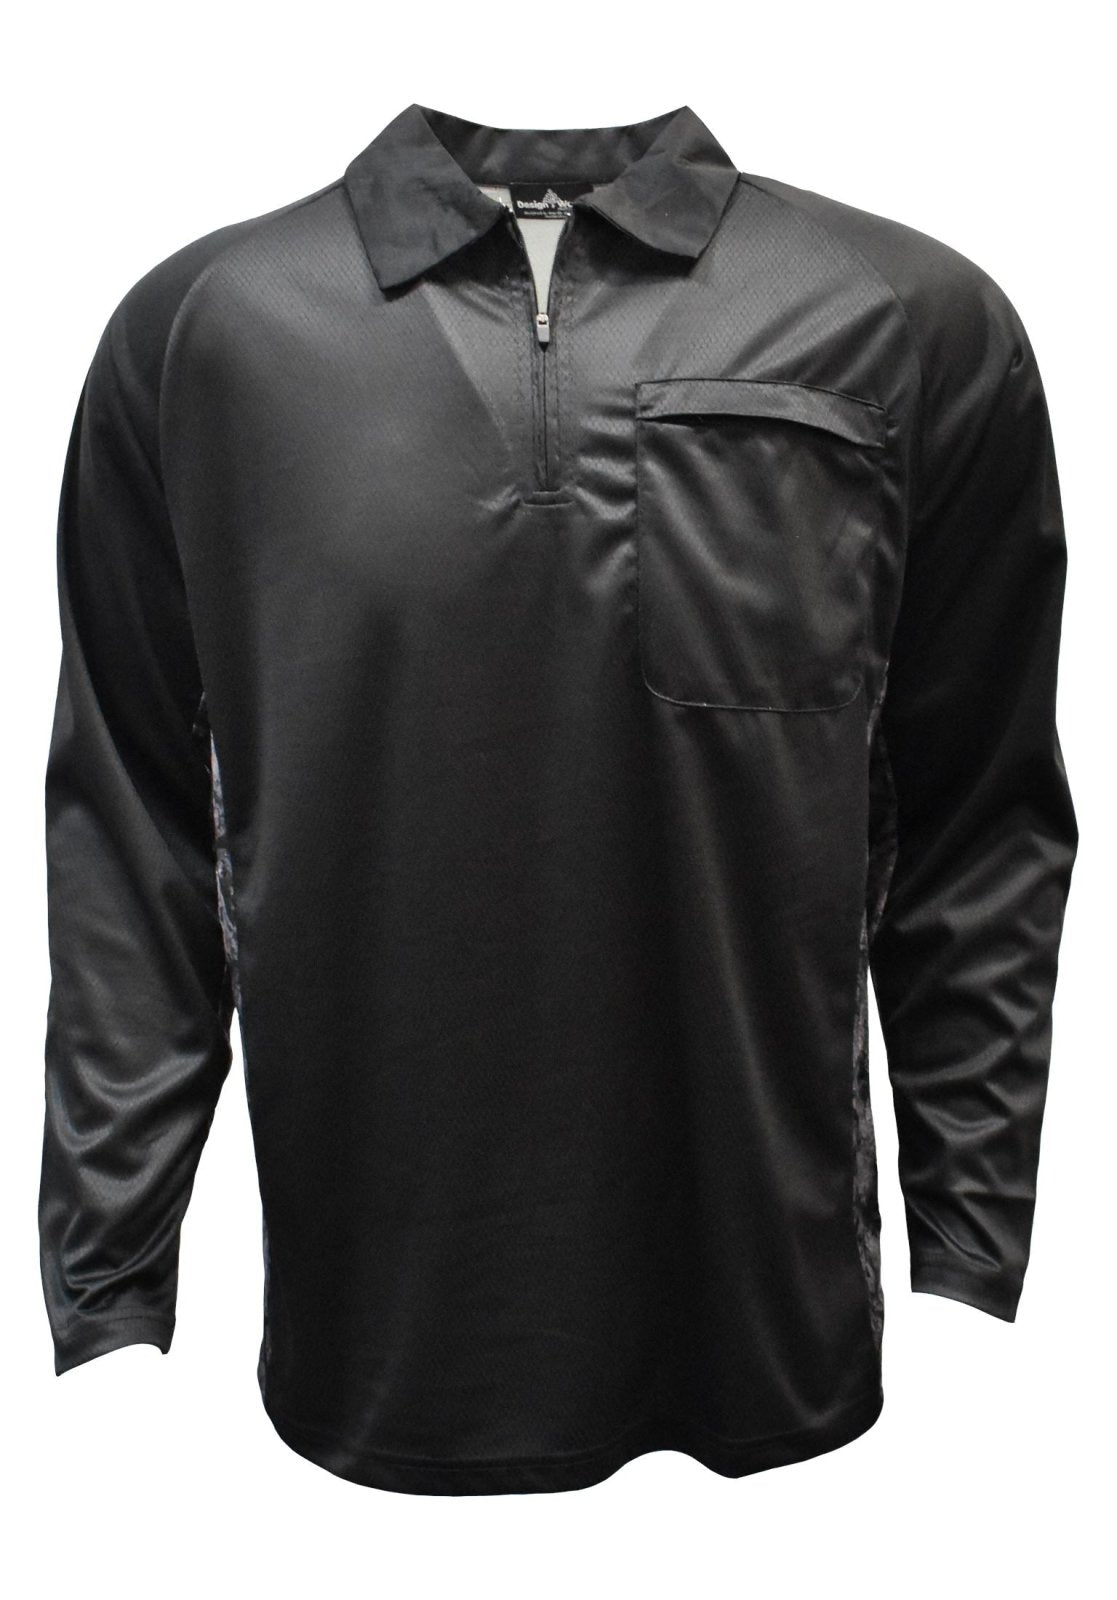 Adult Long Sleeve Sunsmart Shirt - Sports Black